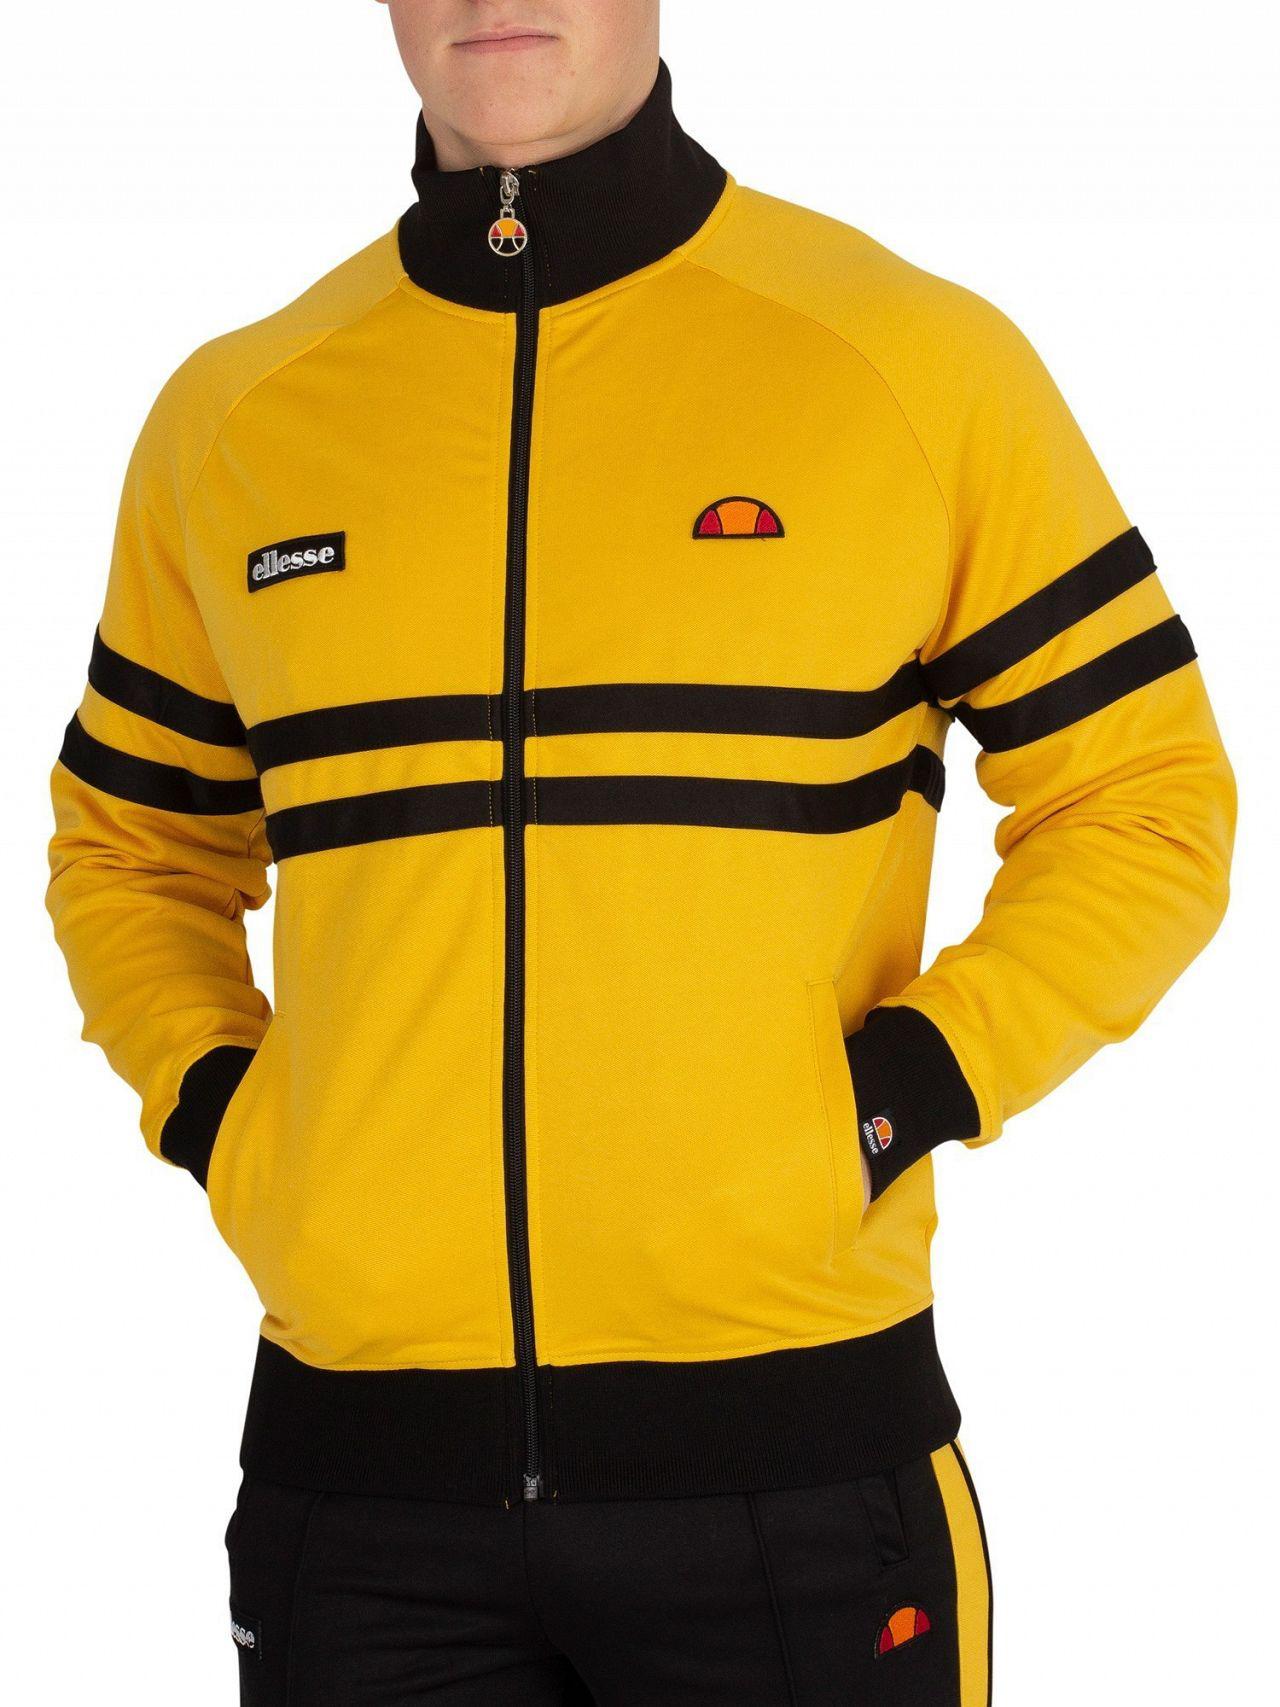 Ellesse Cotton Rimini Track Top in Yellow/Black (Yellow) for Men - Lyst